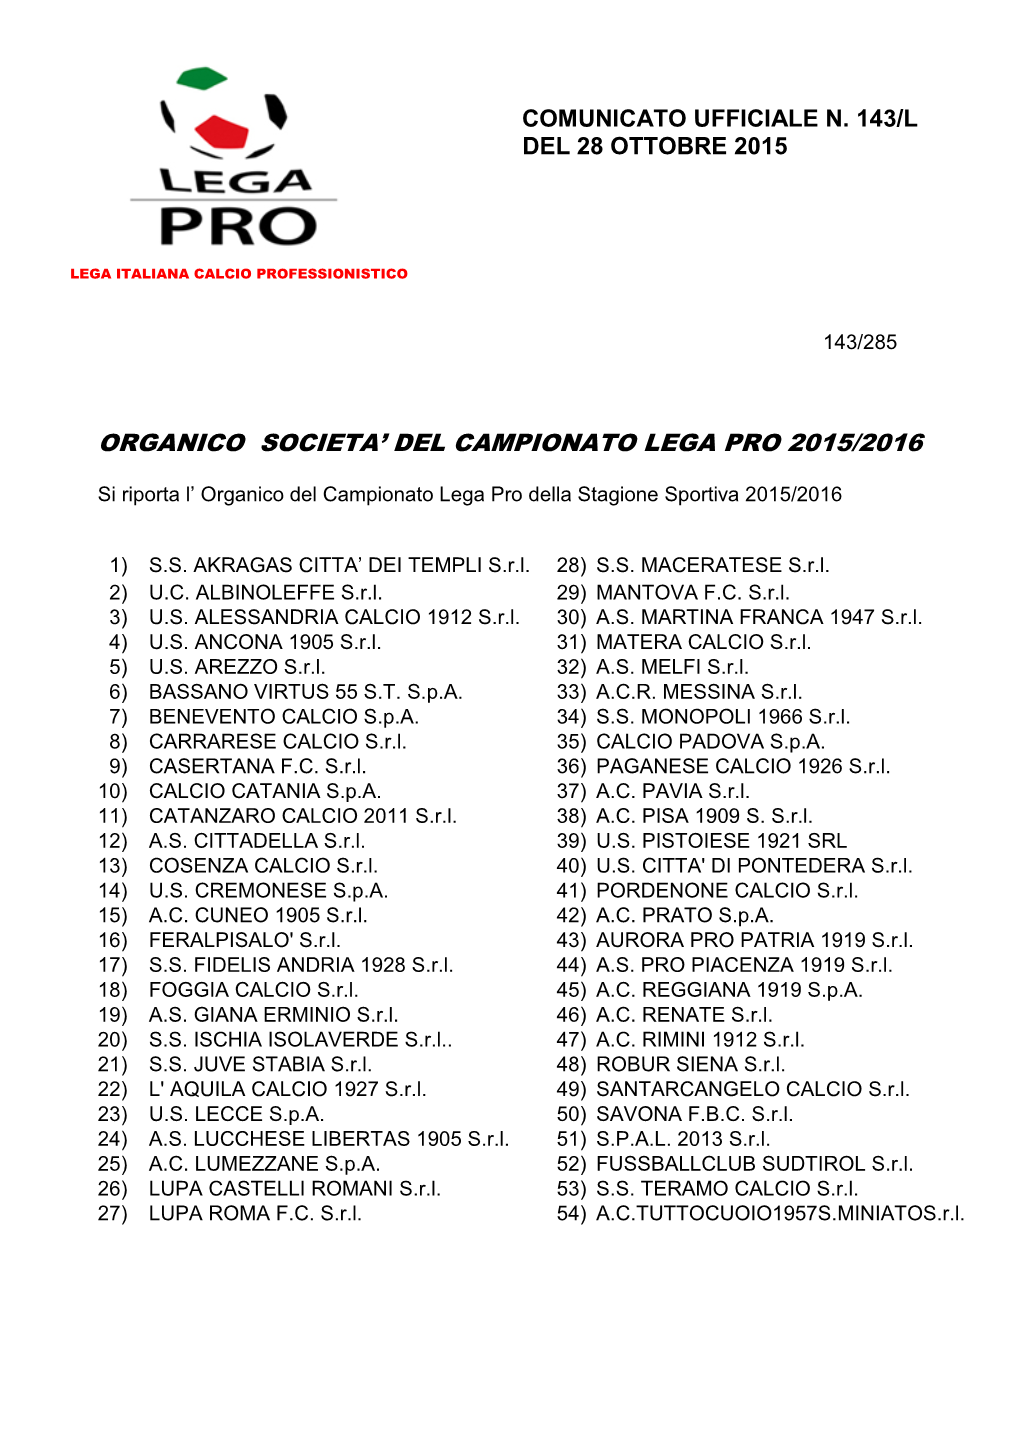 Organico Societa' Del Campionato Lega Pro 2015/2016